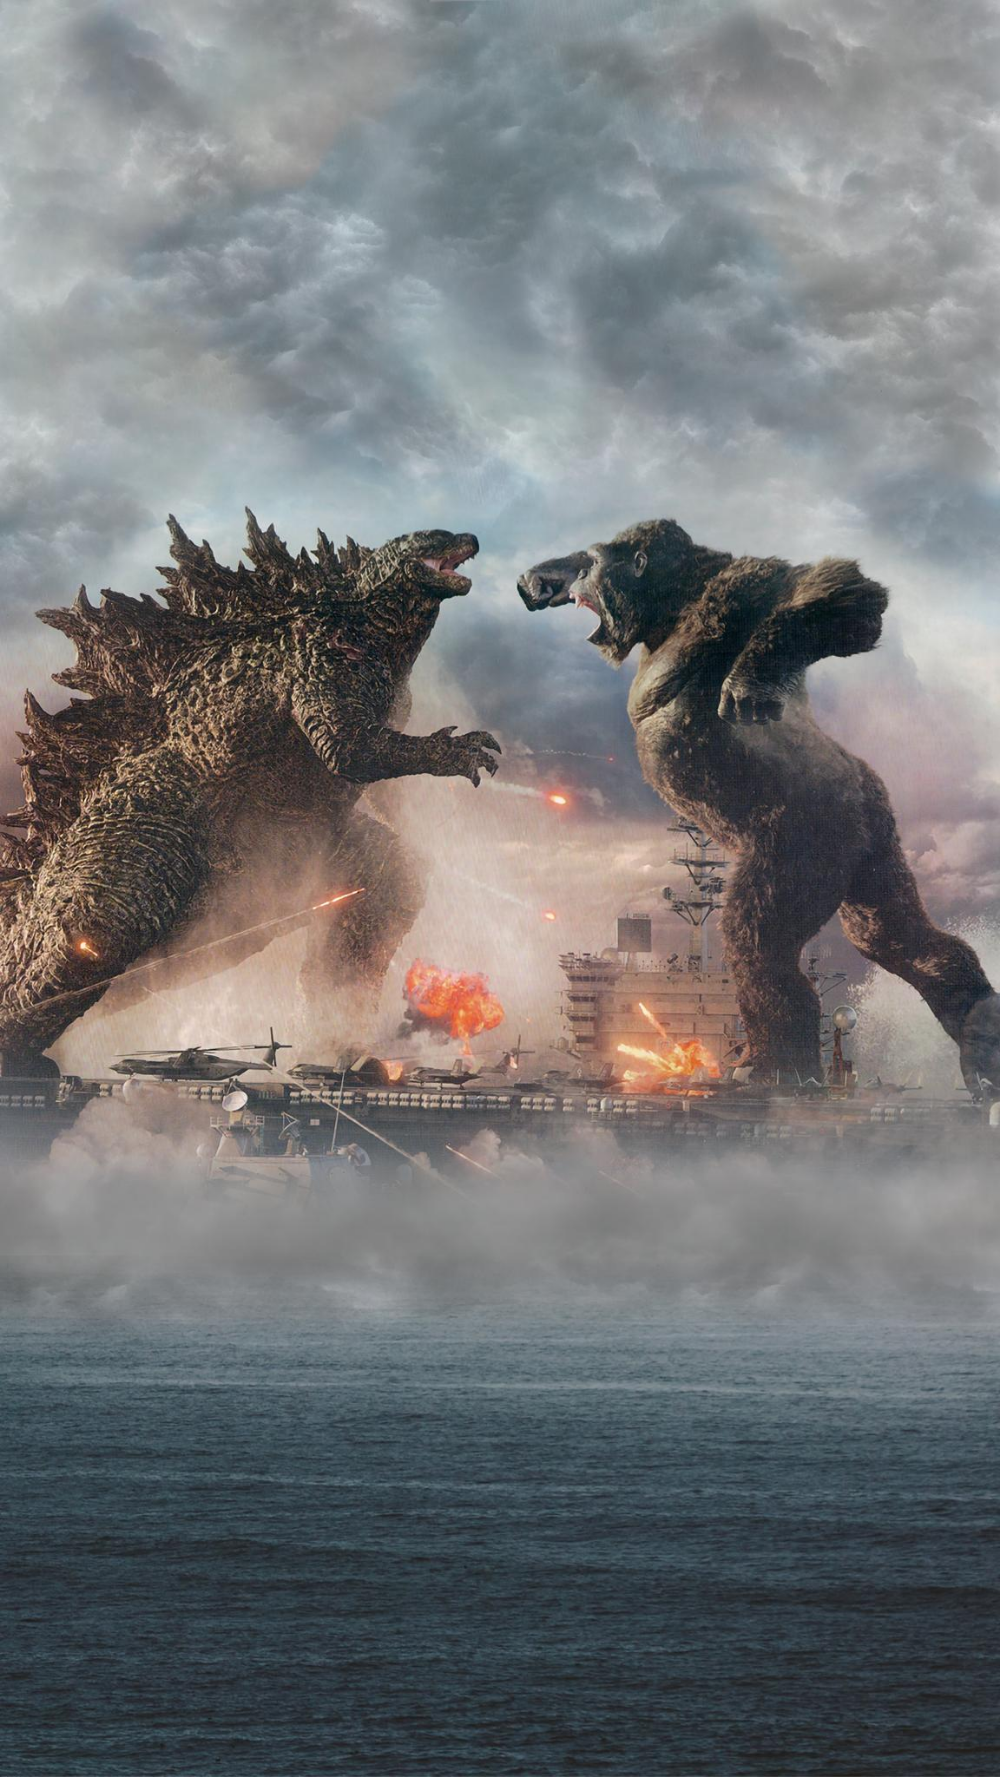 Godzilla vs Kong wallpaper attempt. Kong godzilla, Godzilla wallpaper, King kong vs godzilla